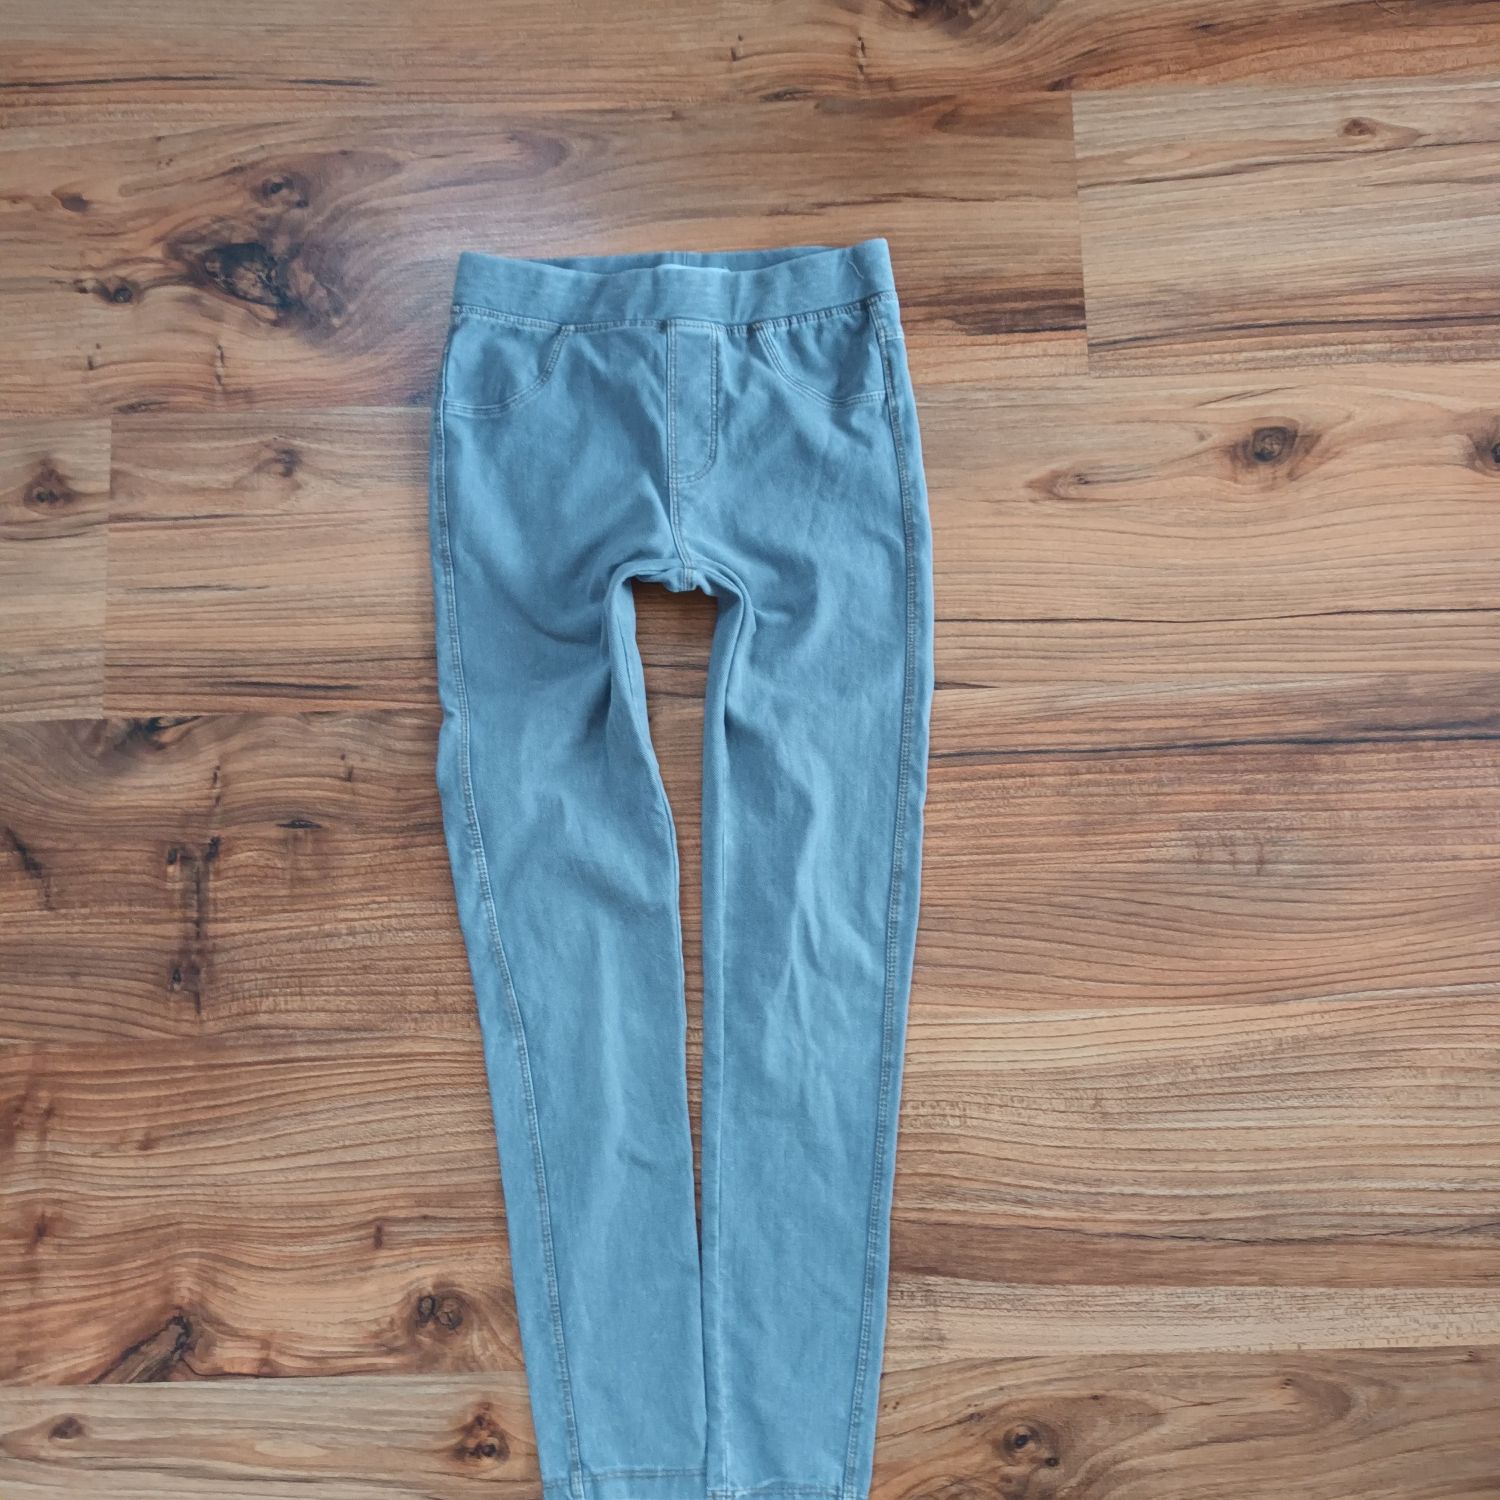 Jegginsy 140 Reserved rurki legginsy szare spodnie elastyczne jeansy